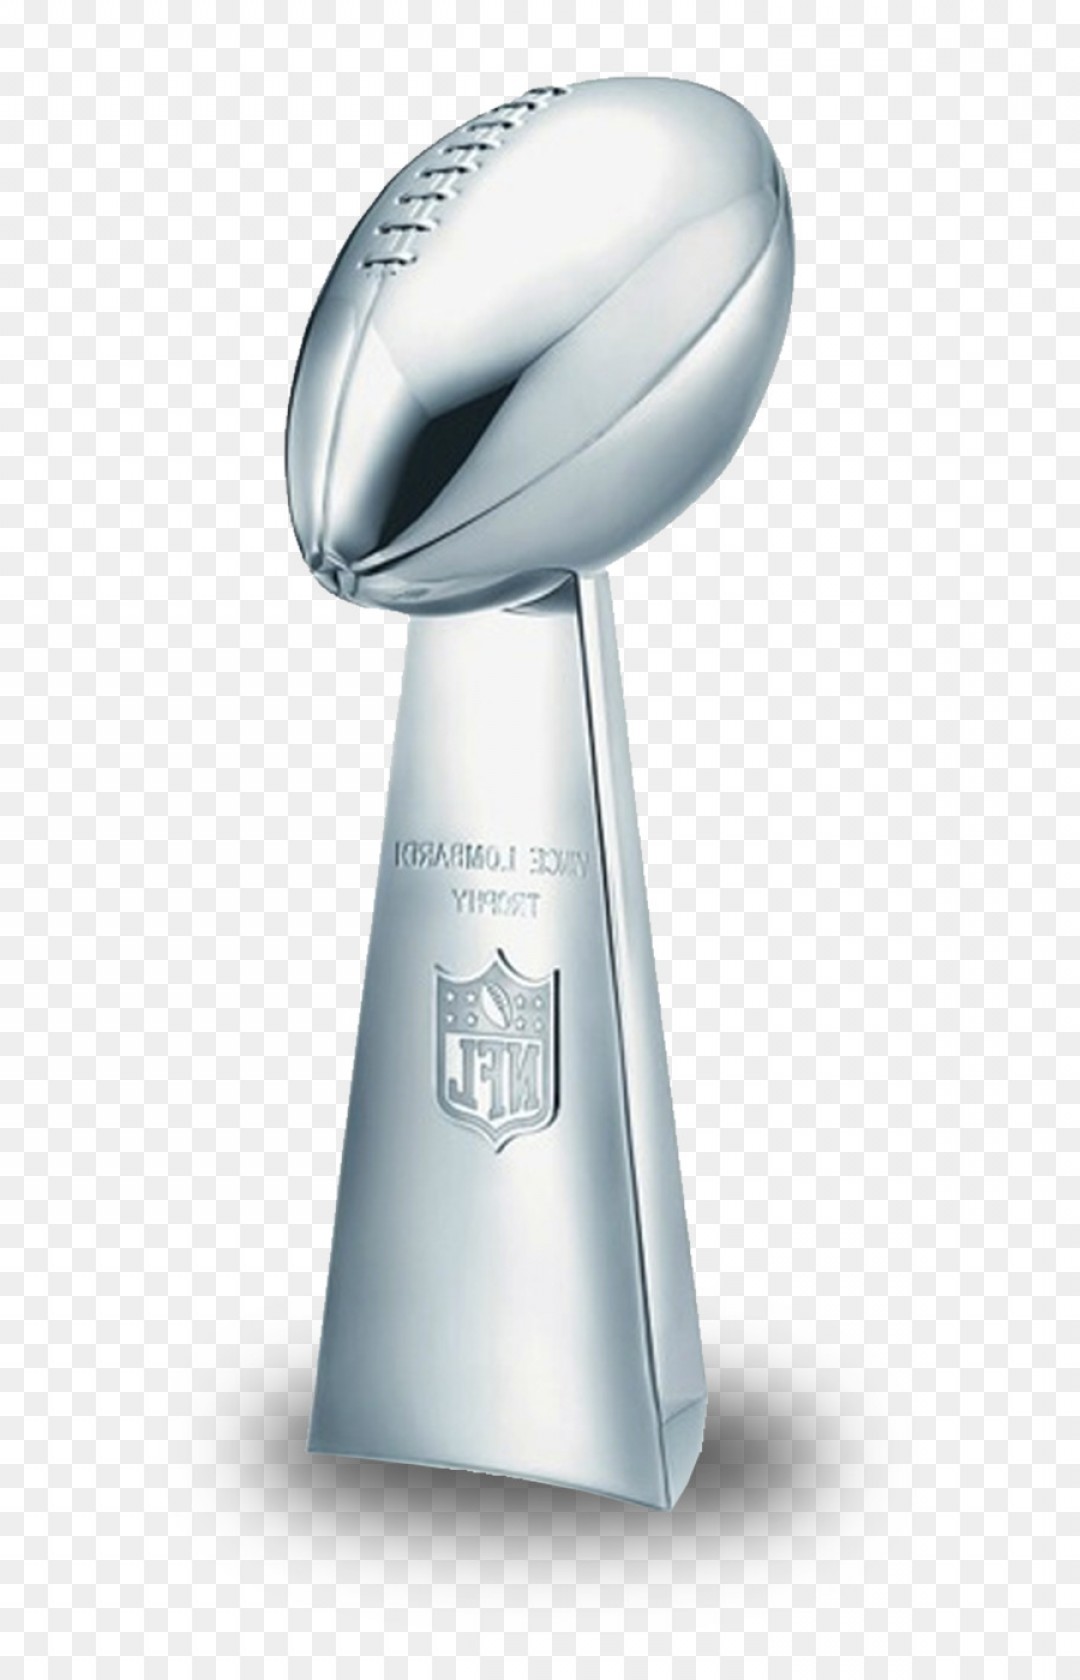 Super Bowl Trophy Vector at Collection of Super Bowl